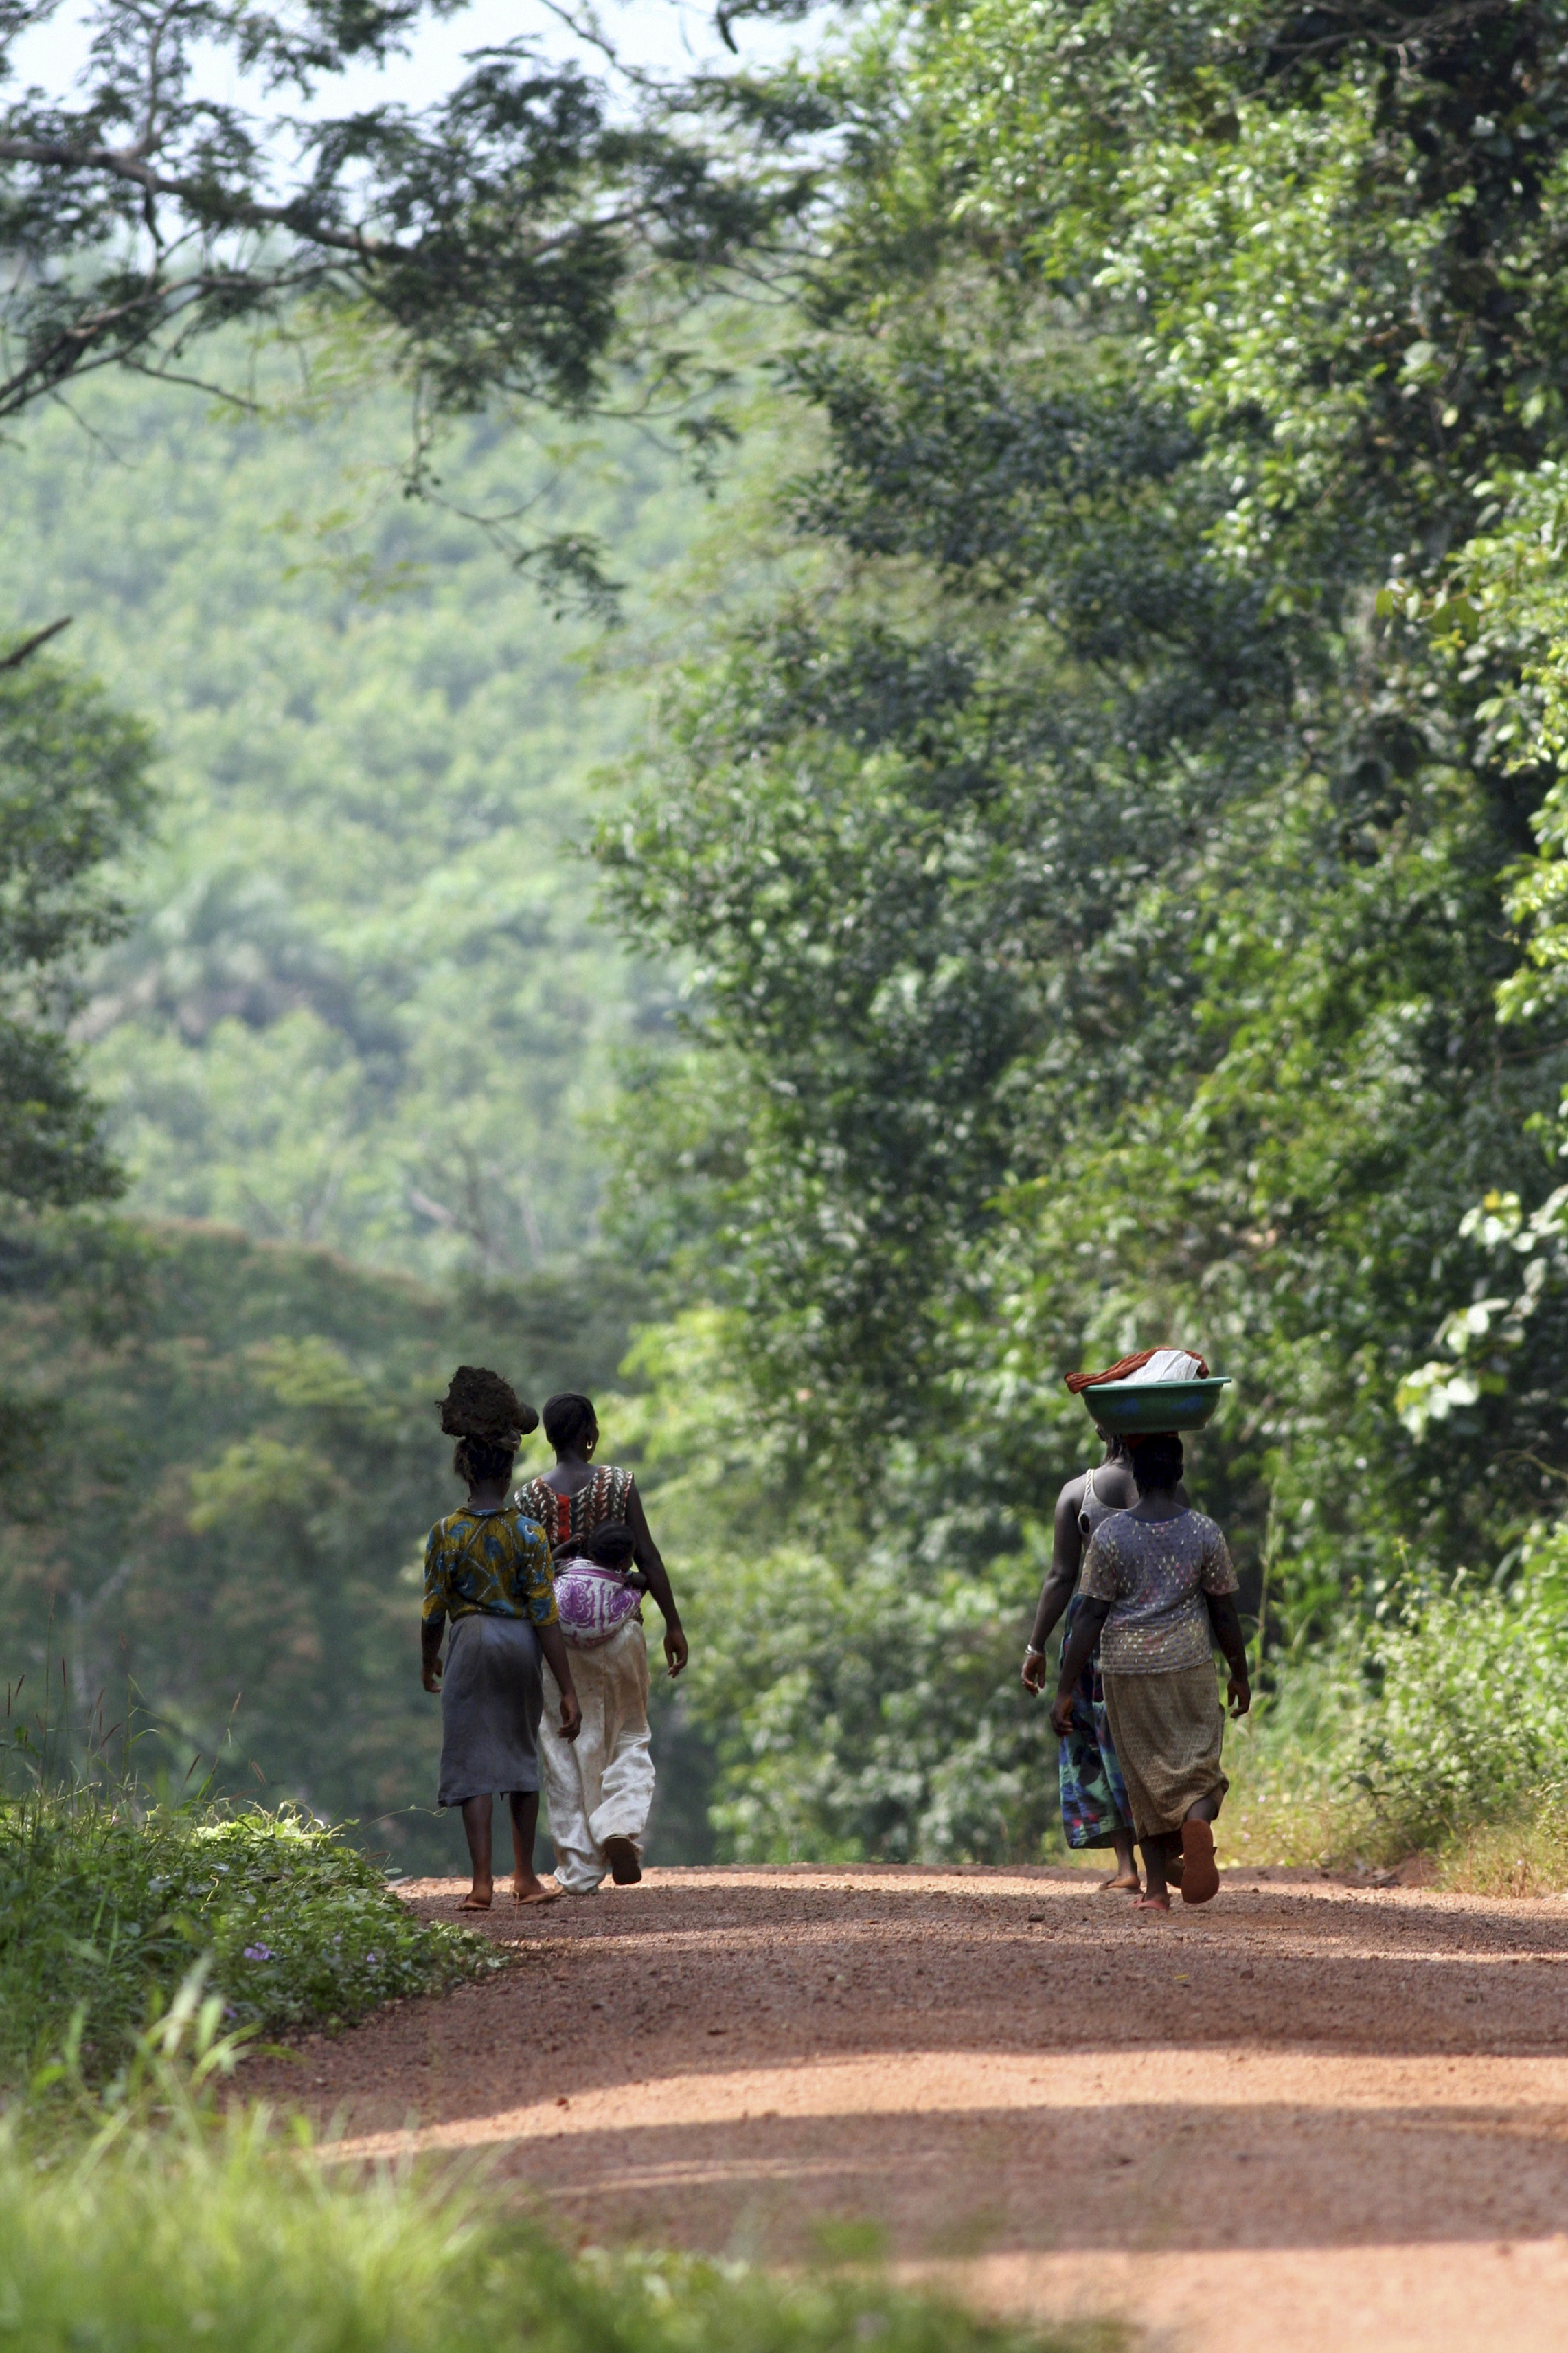 Local_people_using_roads_Gola_Forest_Sierra_Leone_West_Africa.jpg